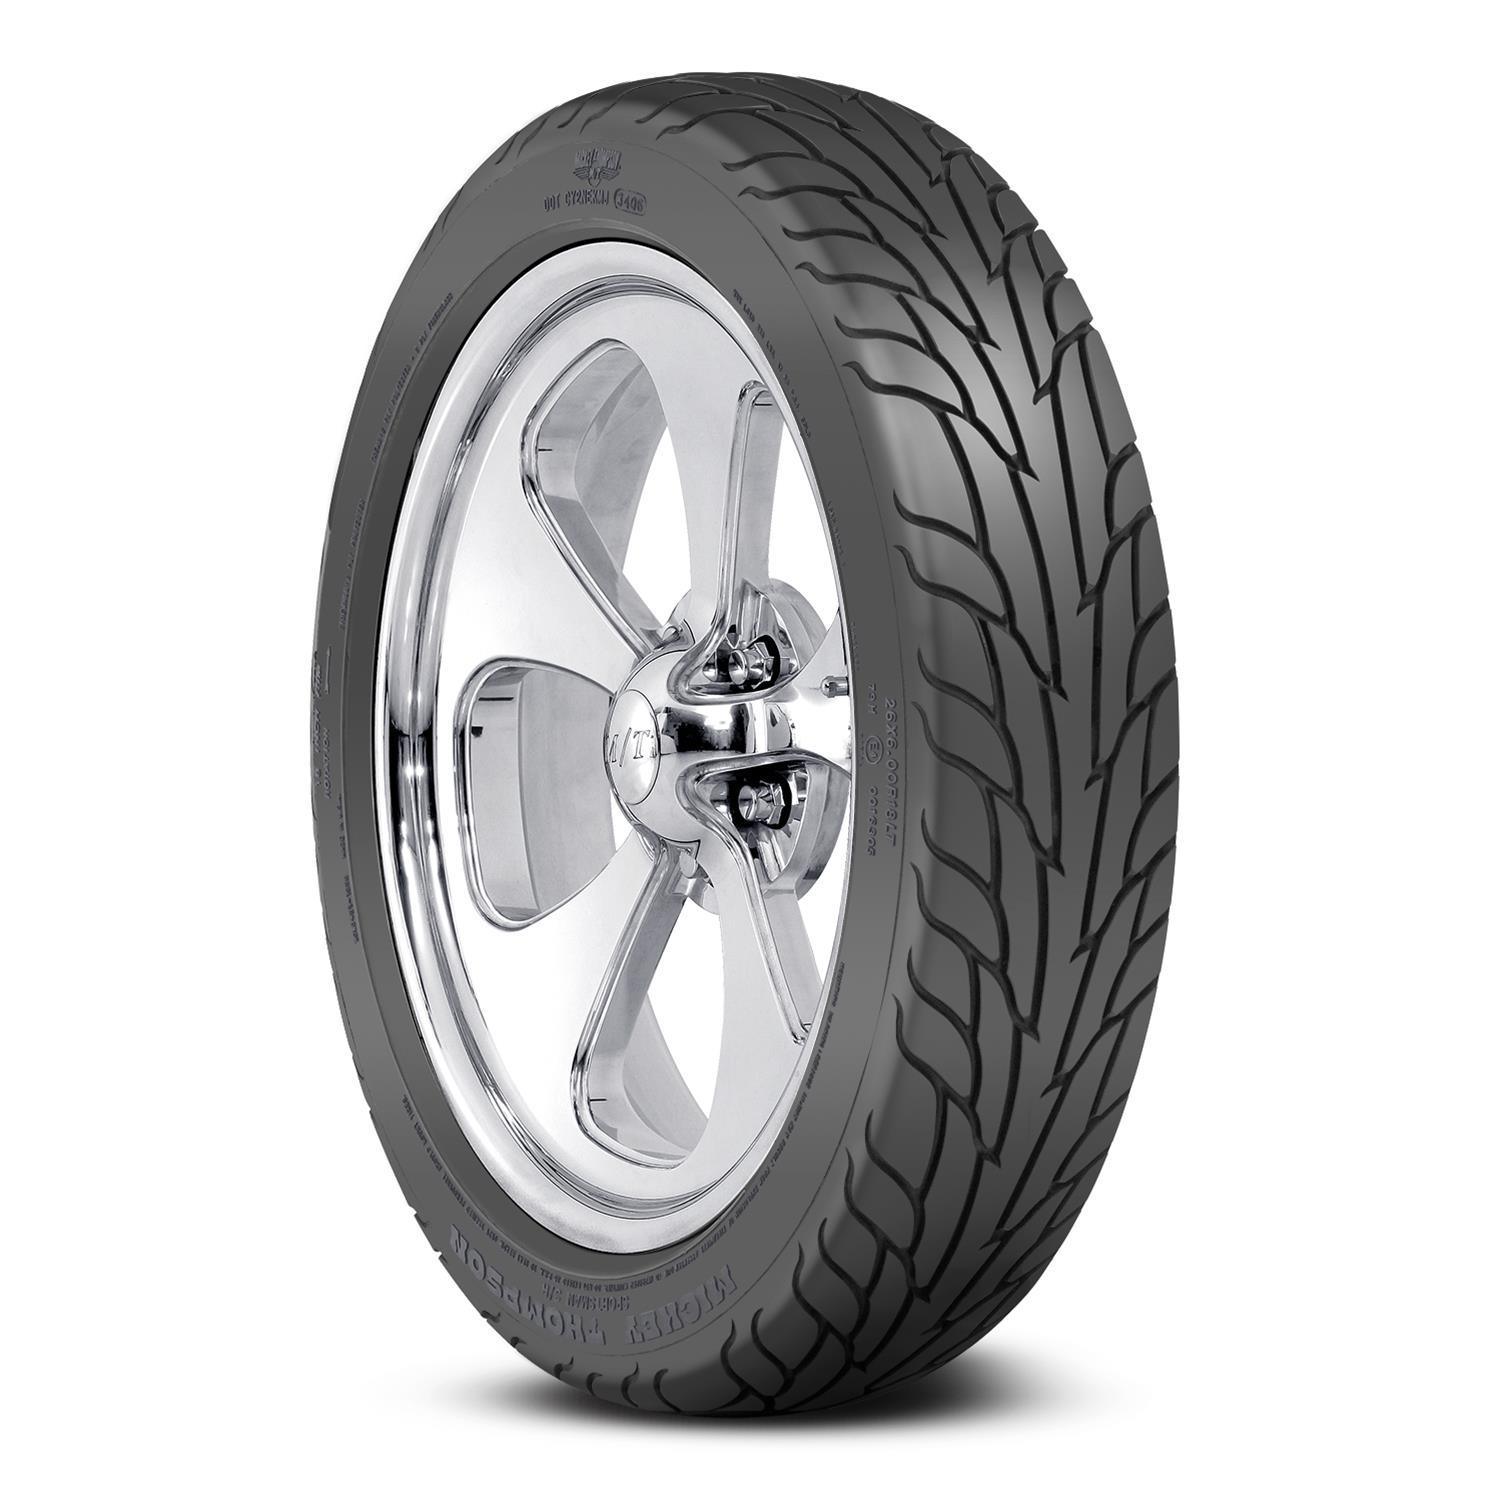 26x6.00R17LT Sportsman S/R Front Tire - Burlile Performance Products